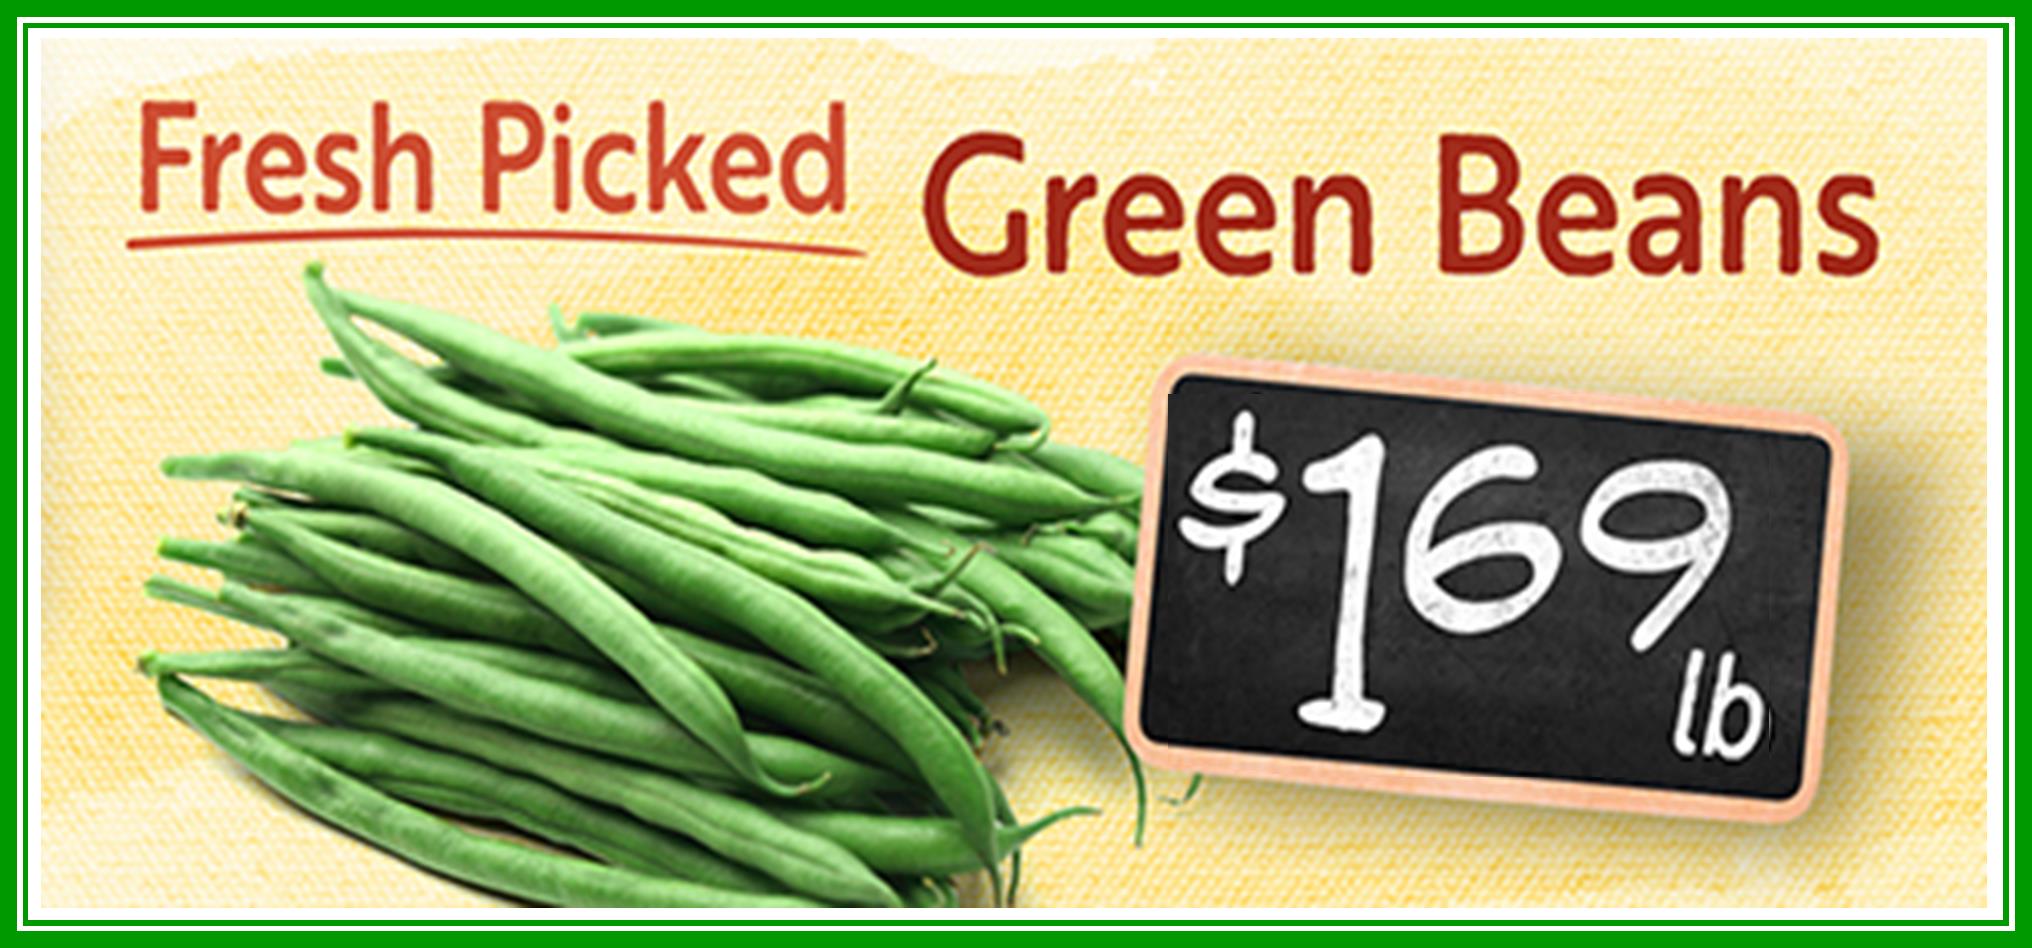 Green Beans 169.jpg